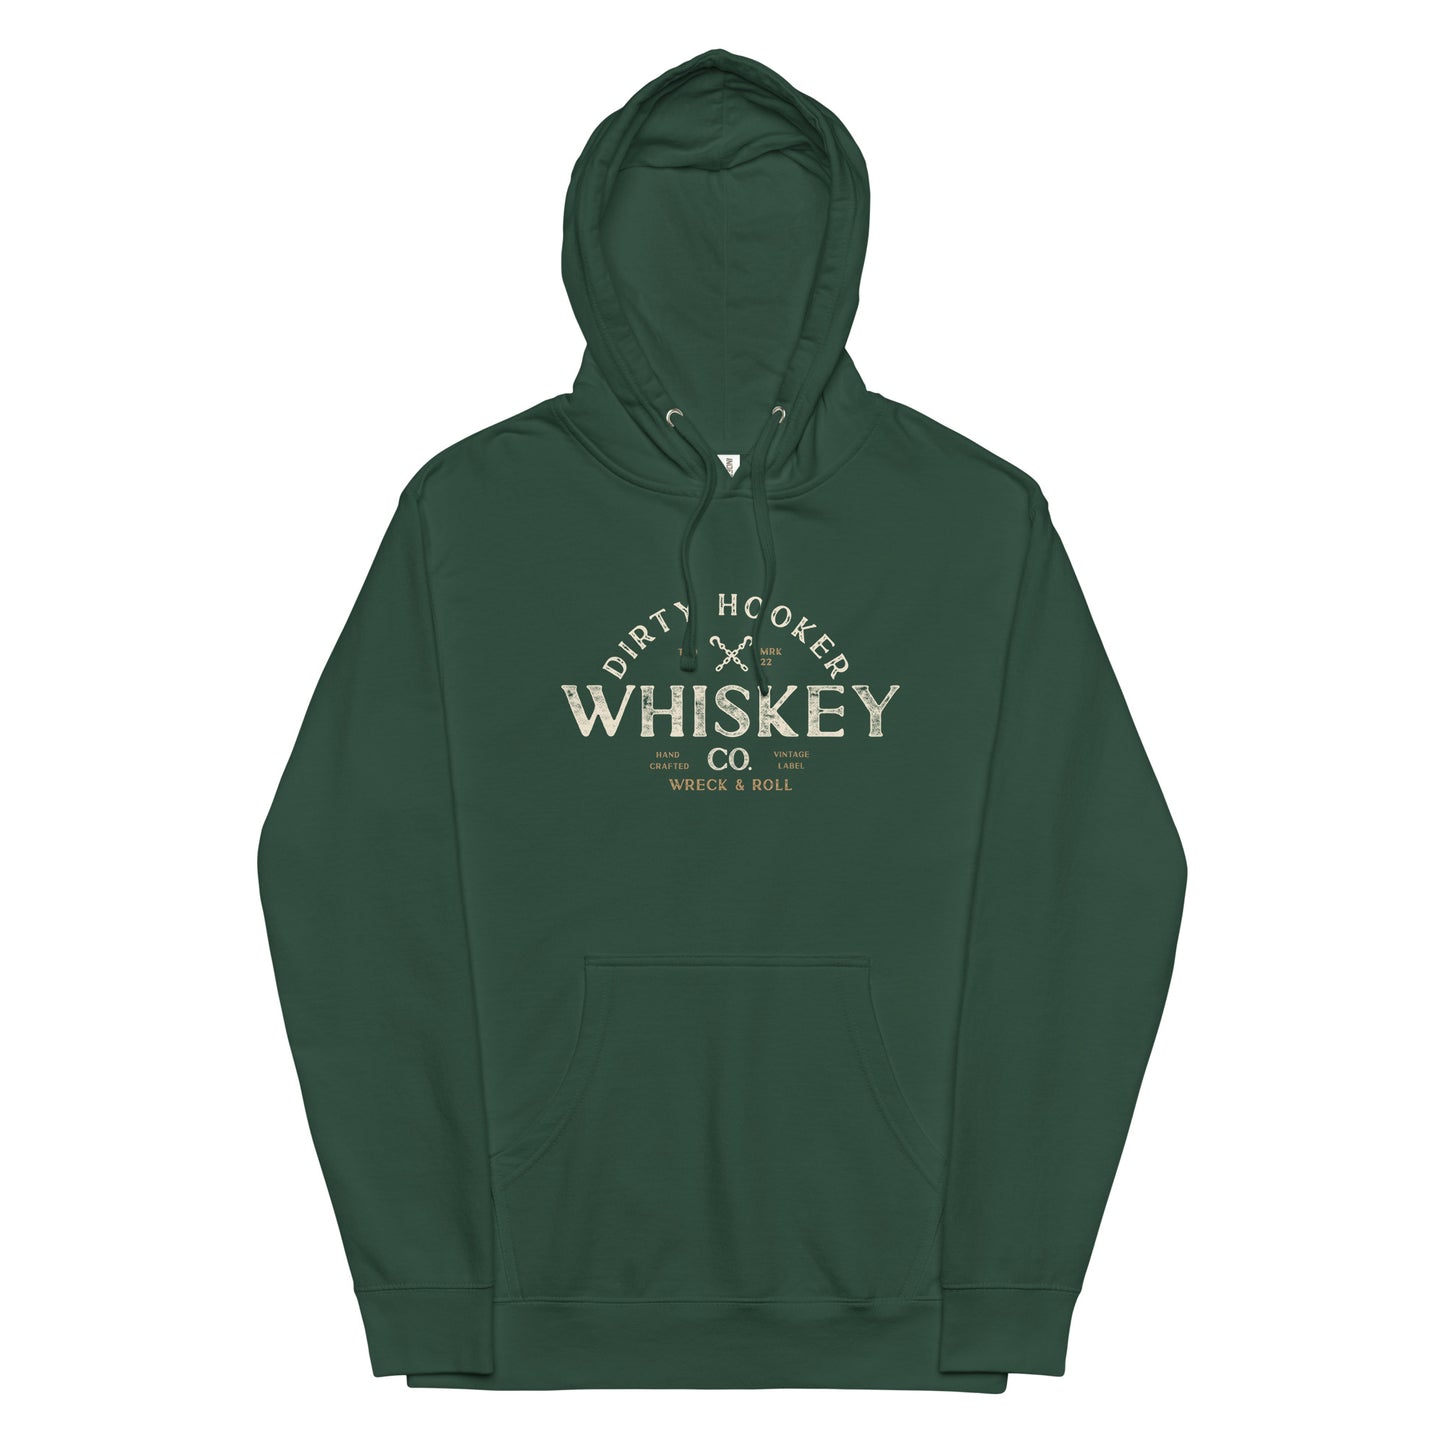 Dirty Hooker Whiskey Unisex midweight hoodie